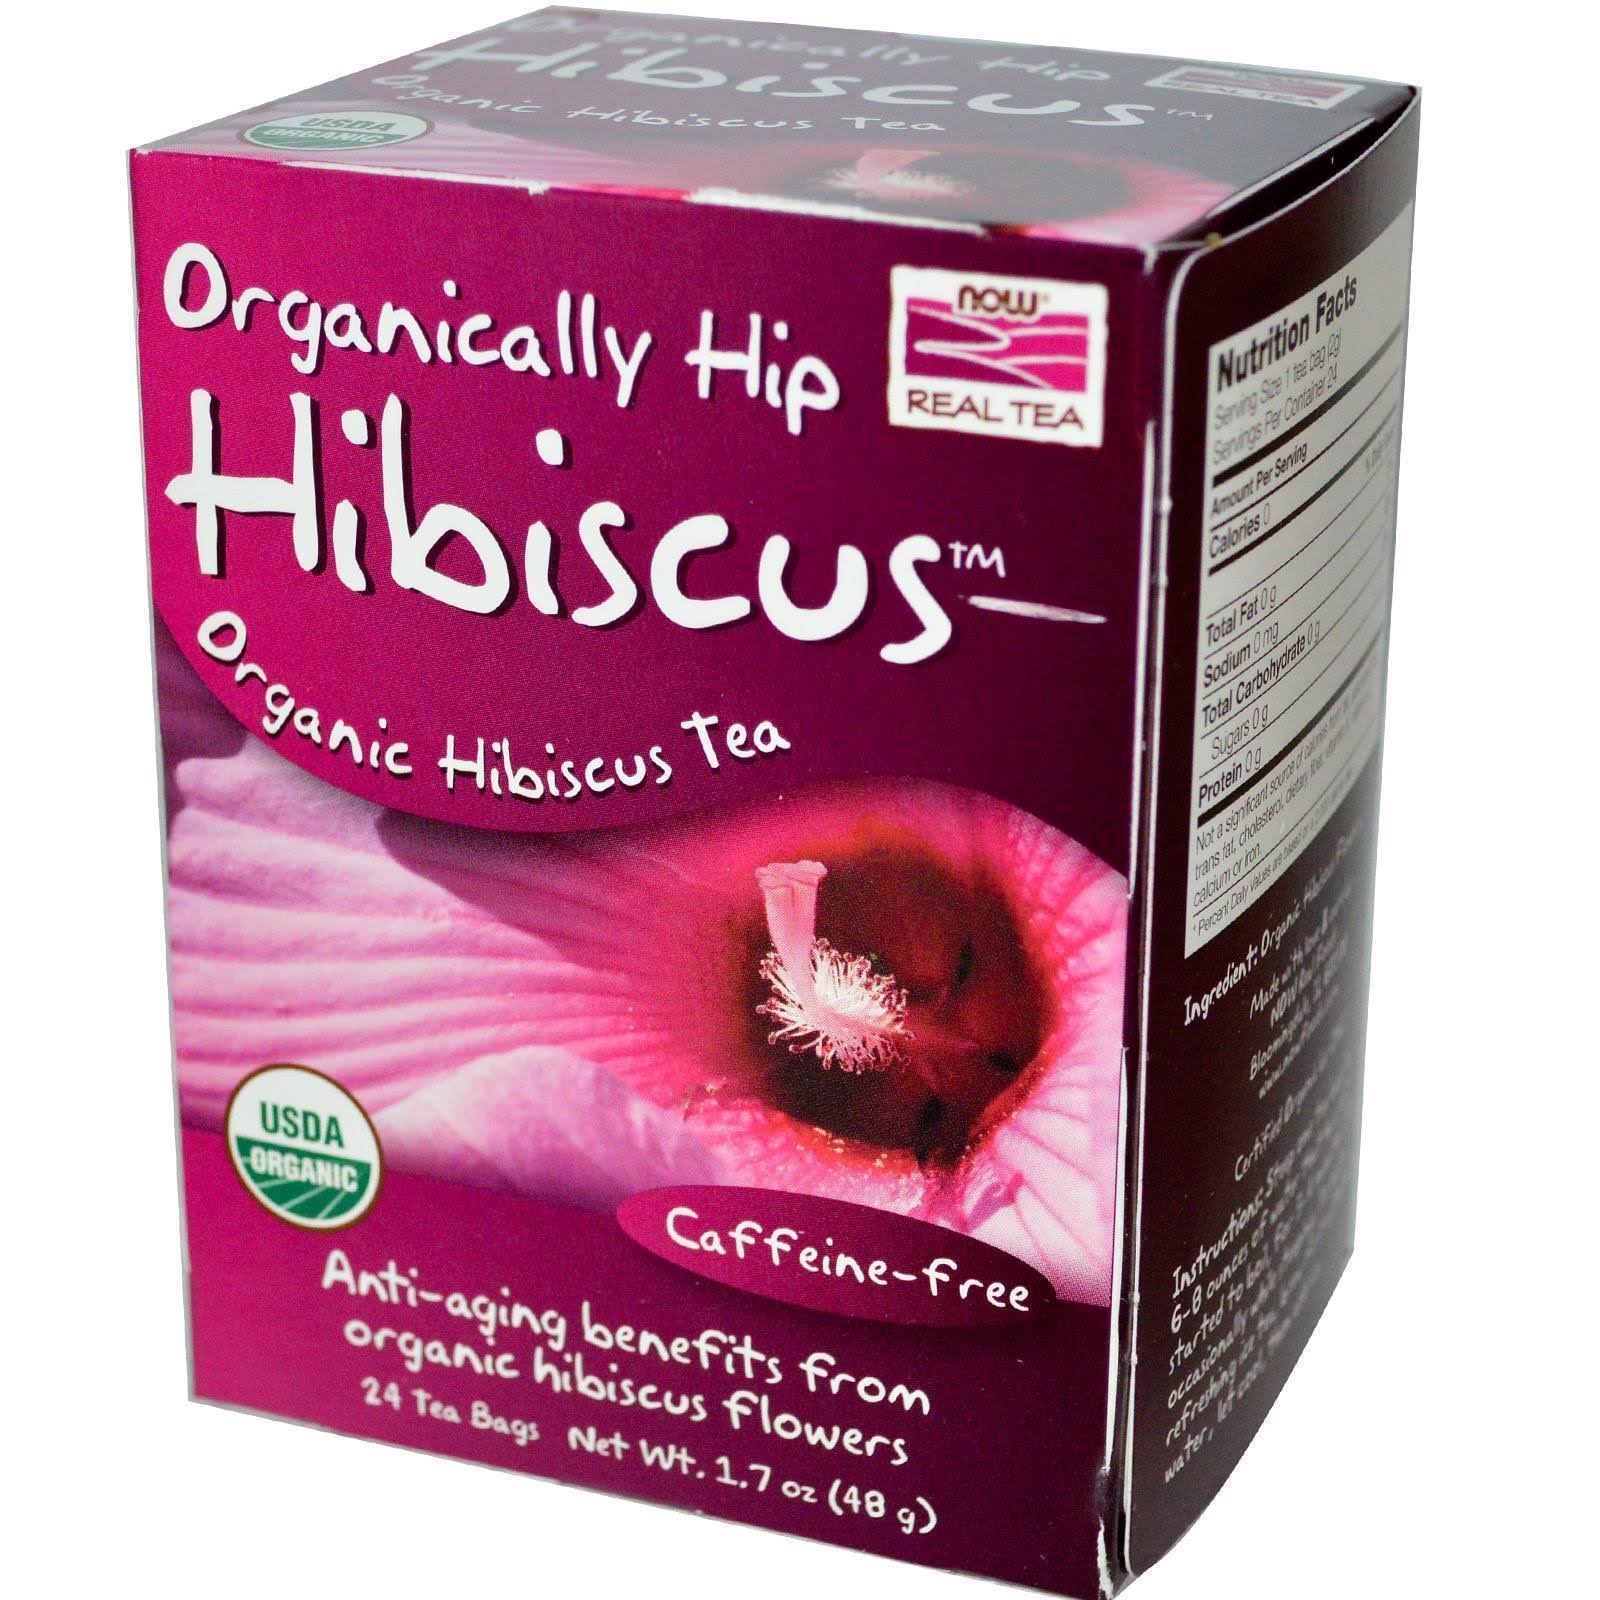 Now Foods Organically Hip Hibiscus Tea - 24 ct